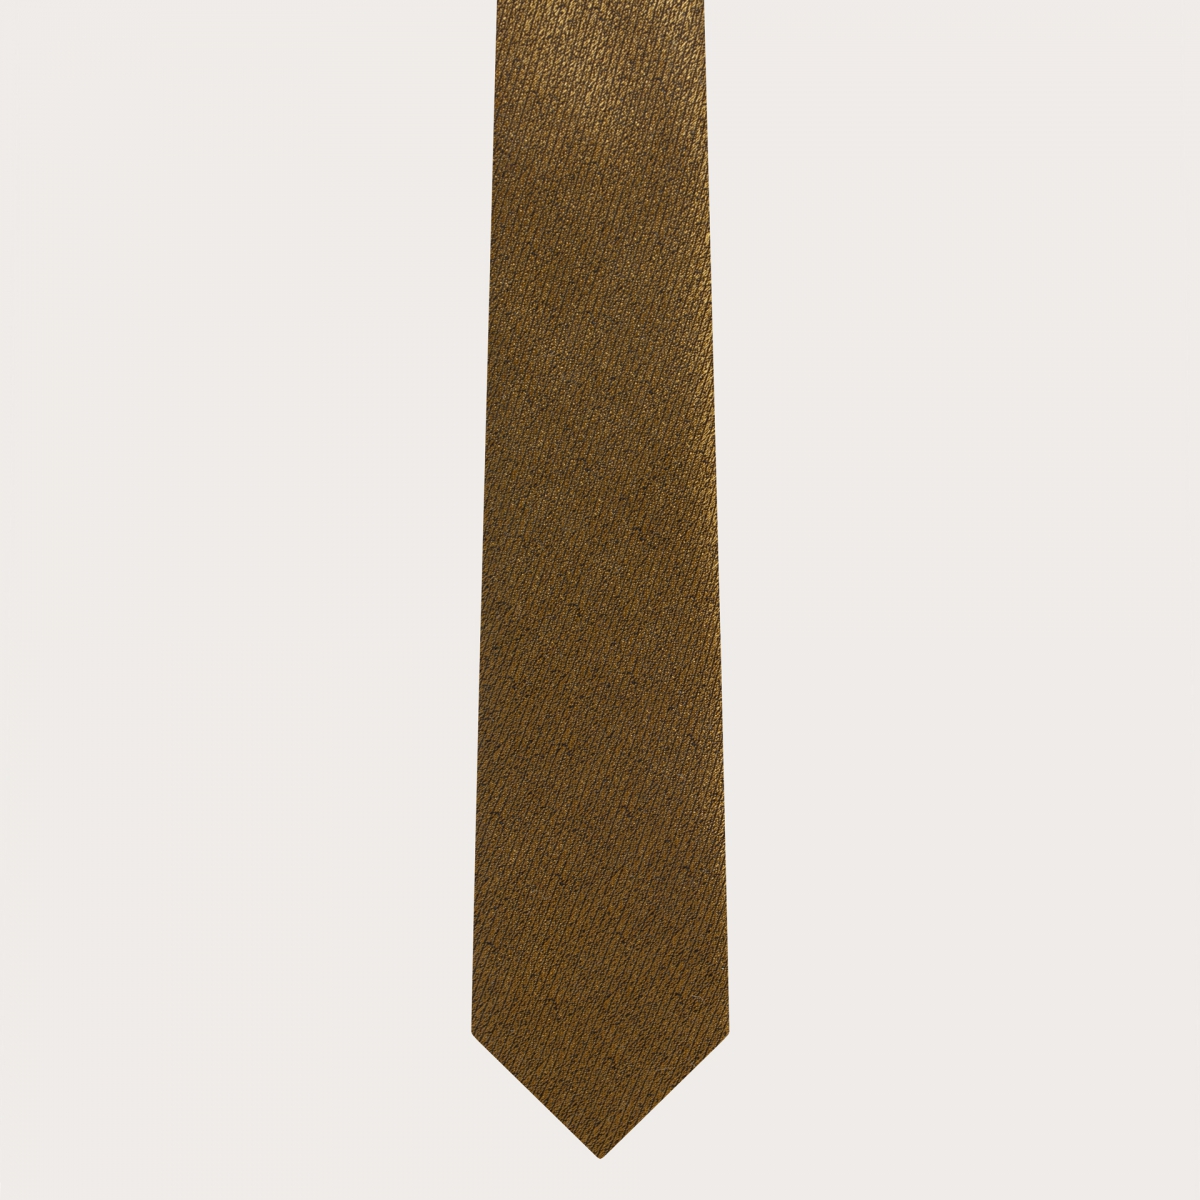 BRUCLE Elegante, schmale Krawatte aus schimmerndem Gold-Jacquard-Seide